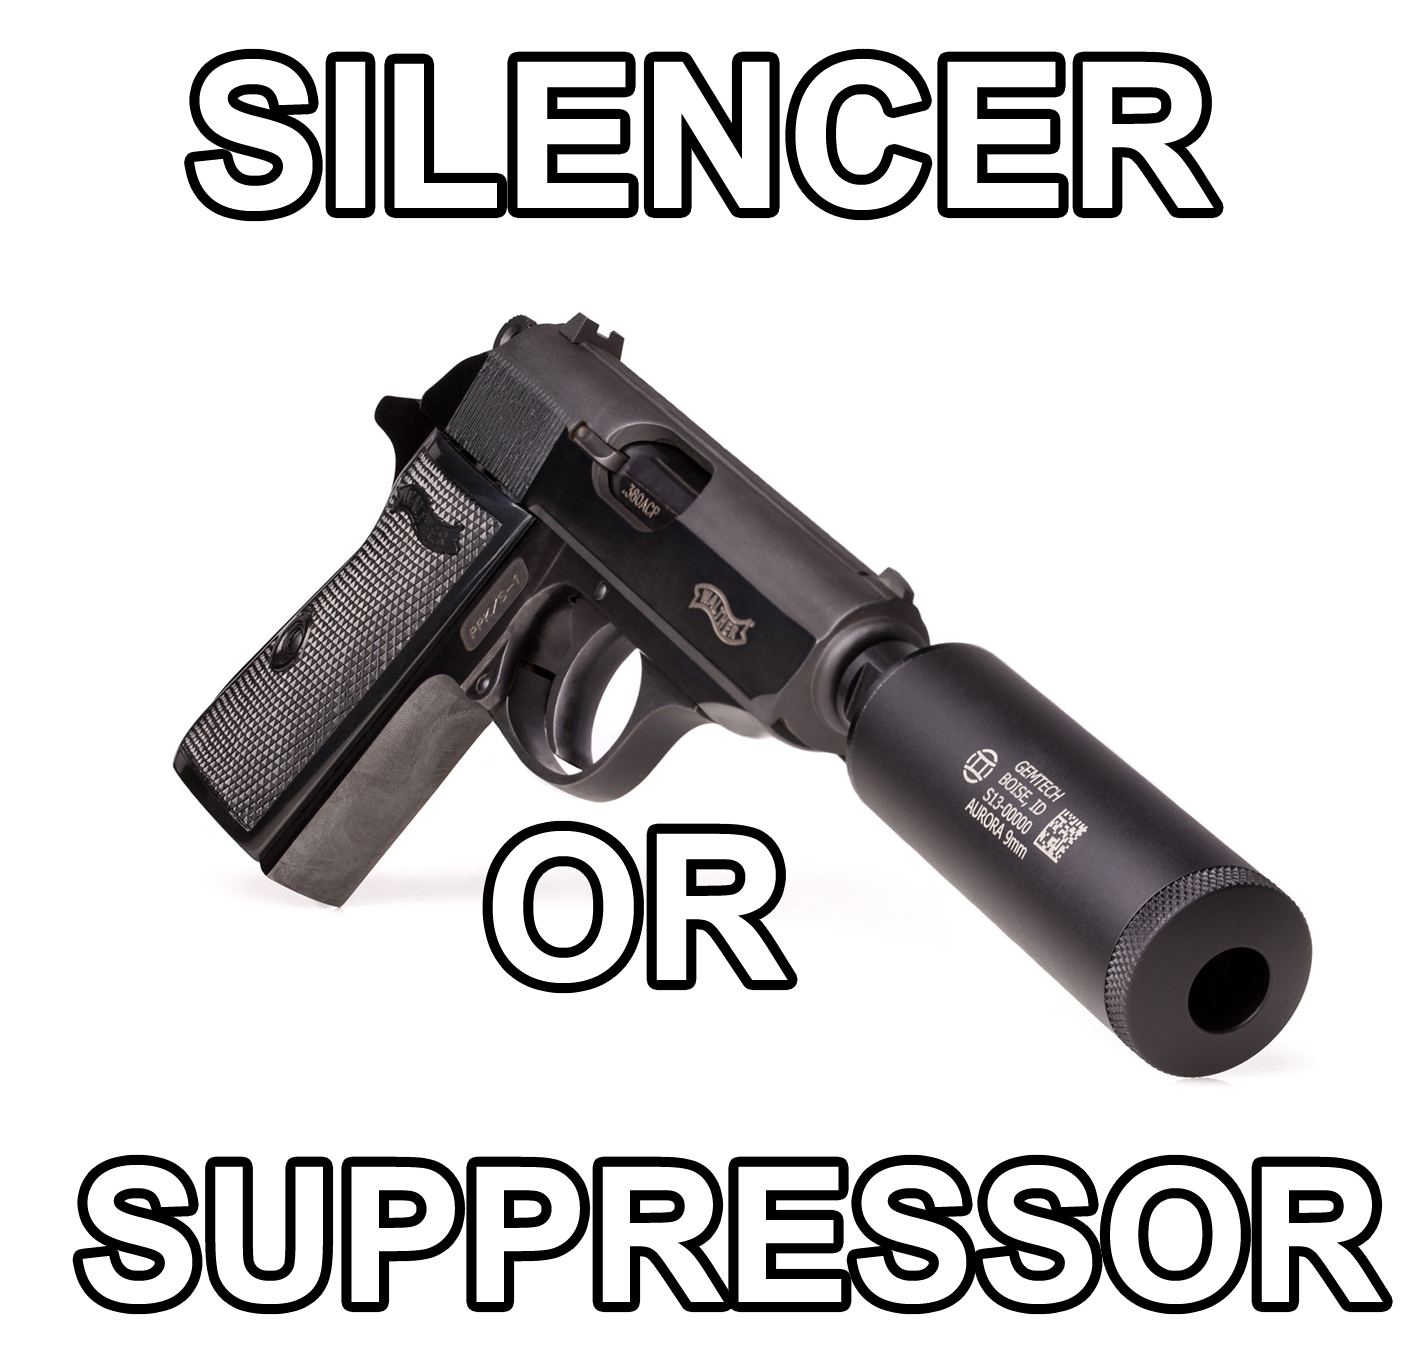 silencer vs suppressor